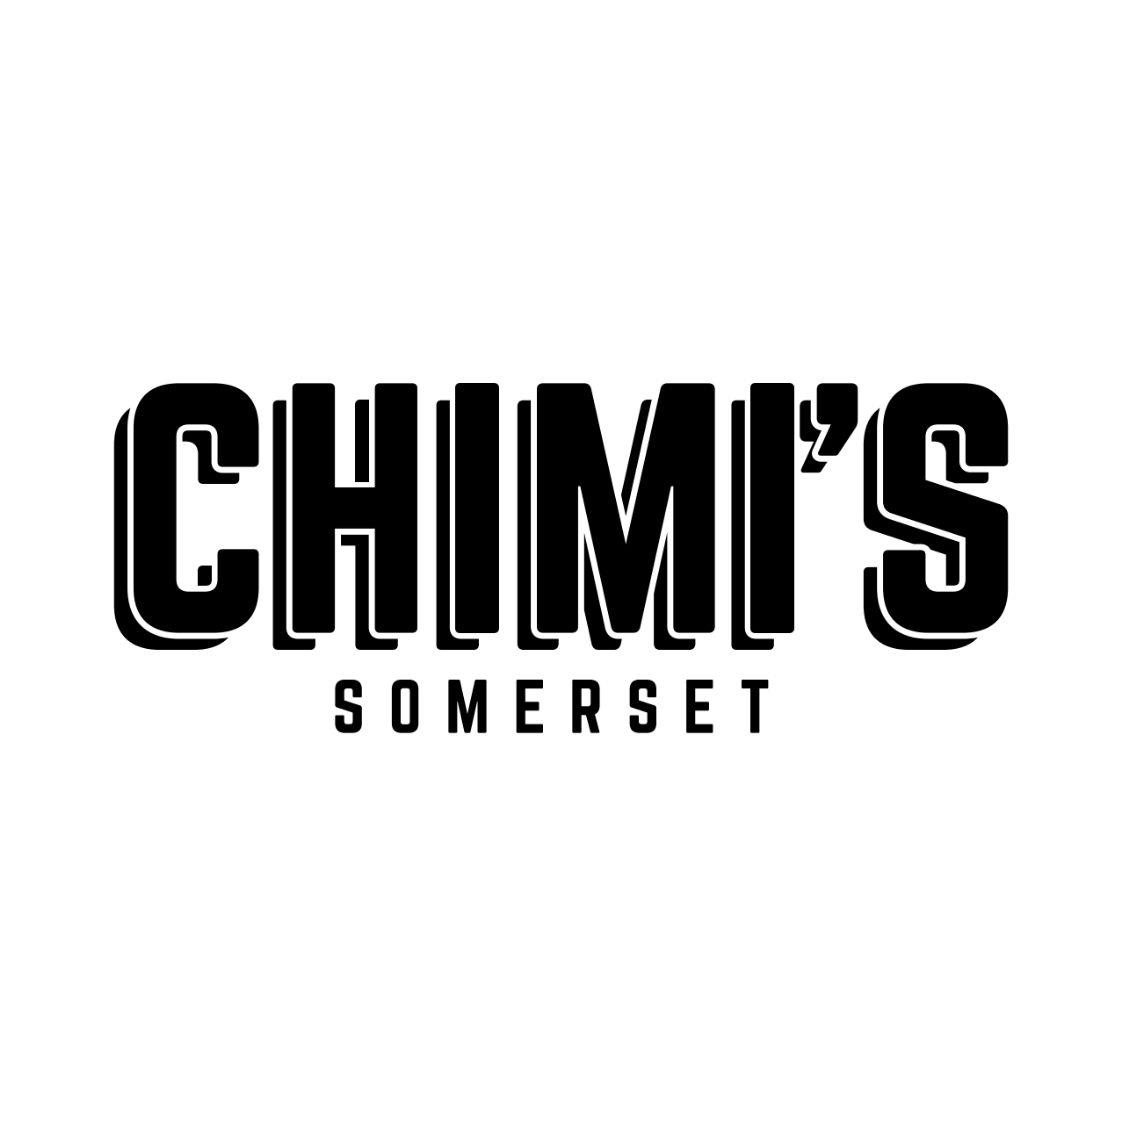 Chimi's